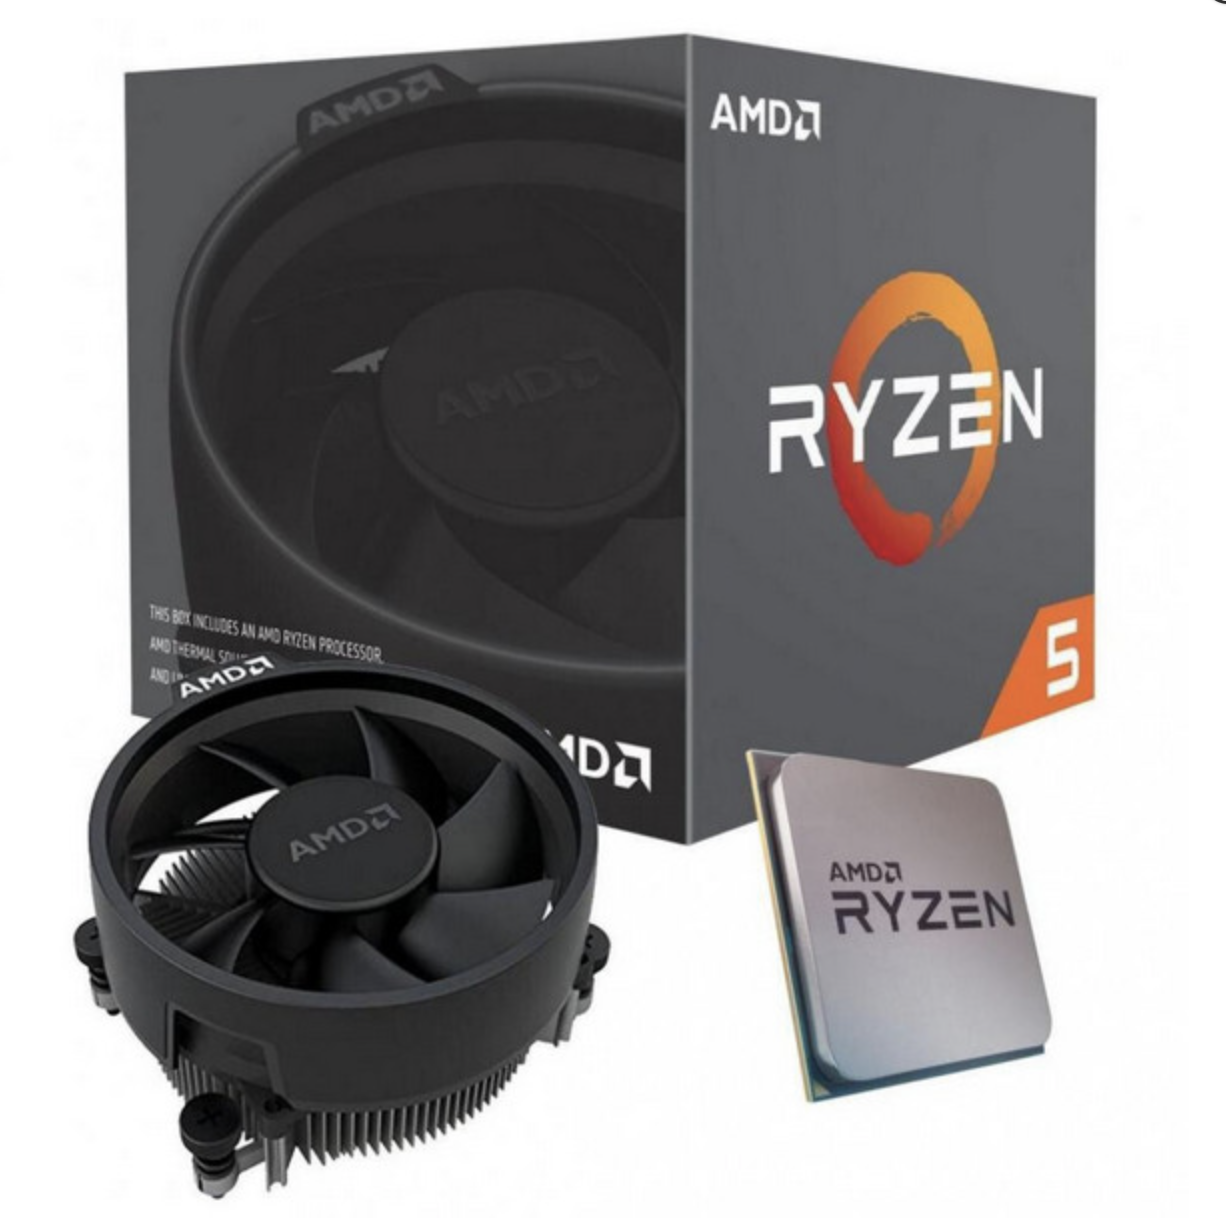 CPU AMD Ryzen 5 2400G 3.6 GHz (3.9 GHz with boost) / 6MB / 4 cores 8 threads / Radeon Vega 11 / socket AM4 / 65W (cTDP 45-65W)